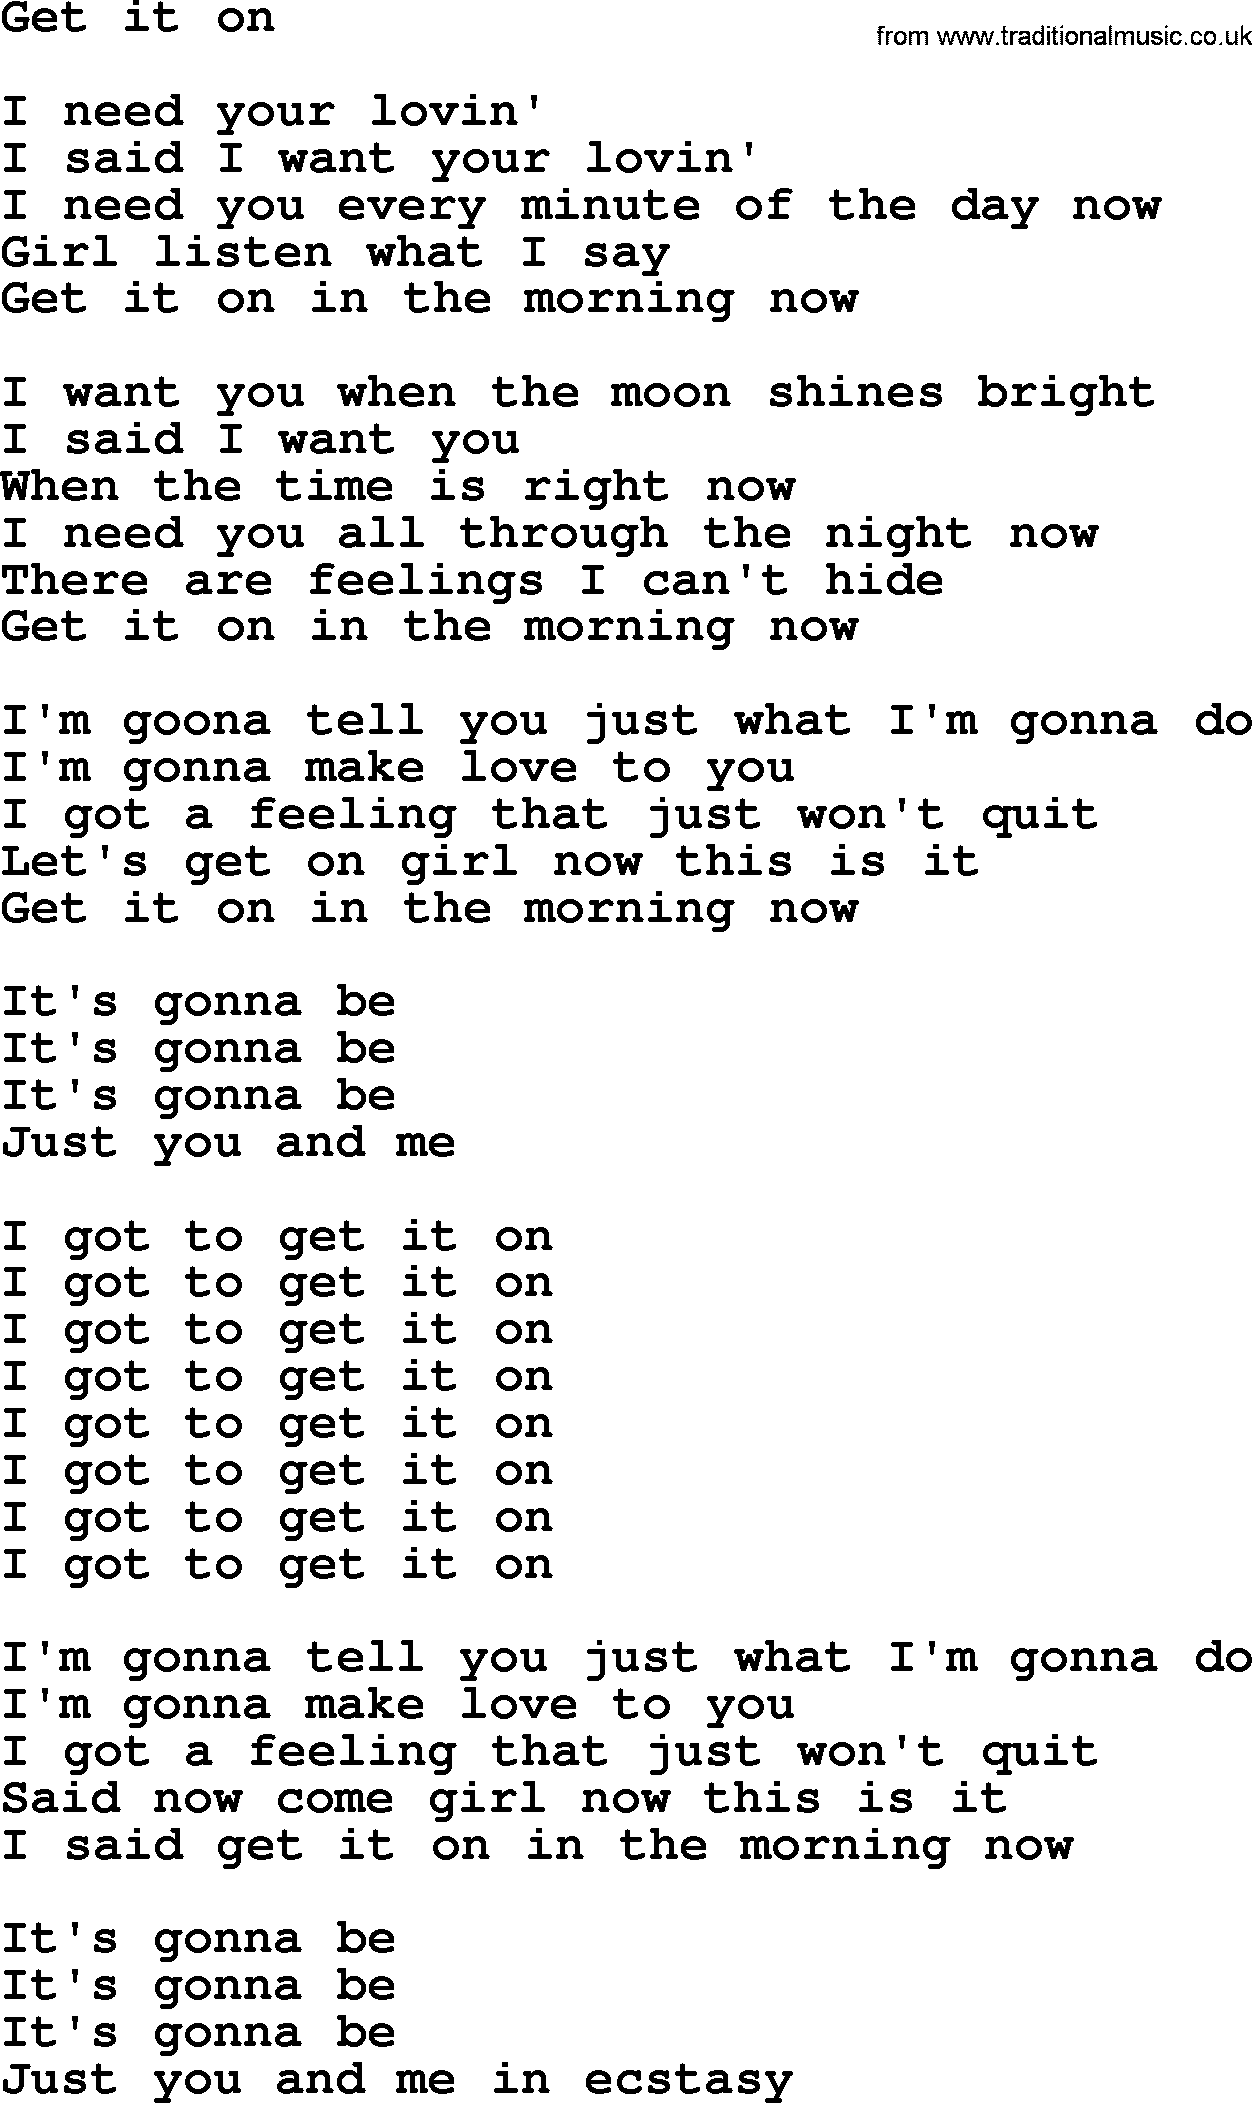 Bruce Springsteen song: Get It On lyrics